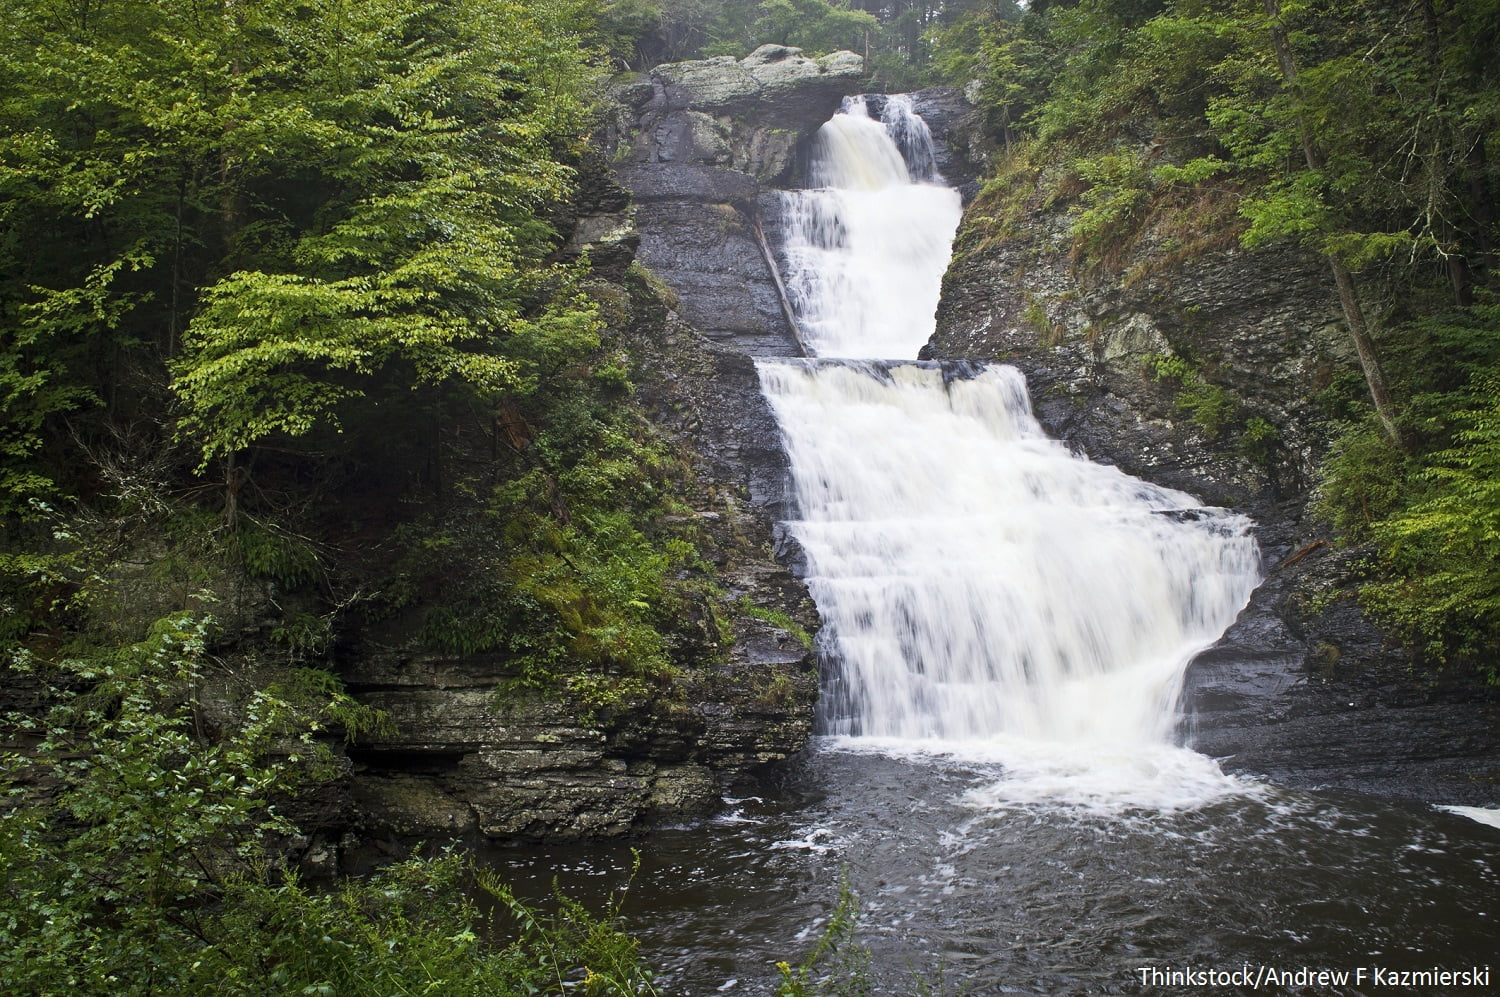 Plan a Day at Raymondskill Falls in the Poconos